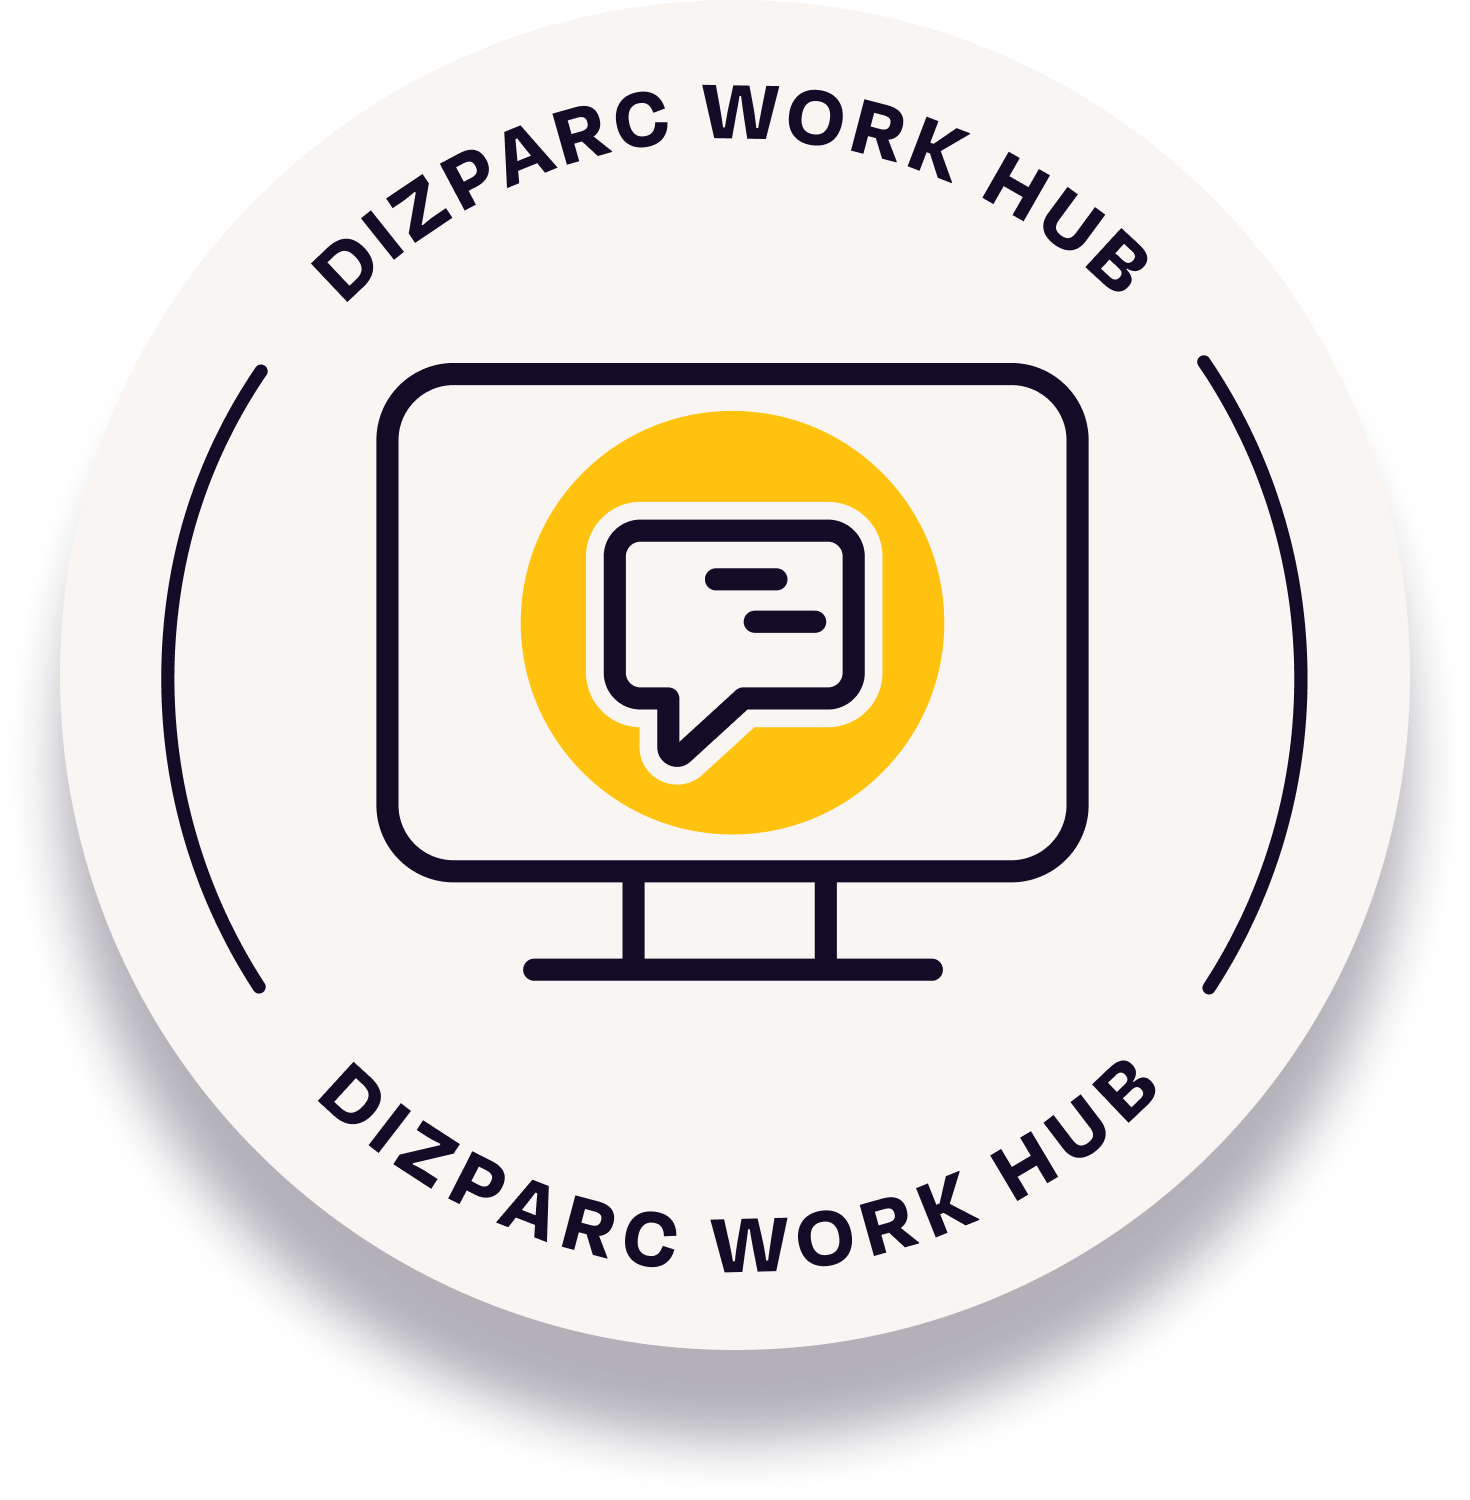 Dizparc Work Hub Emblem